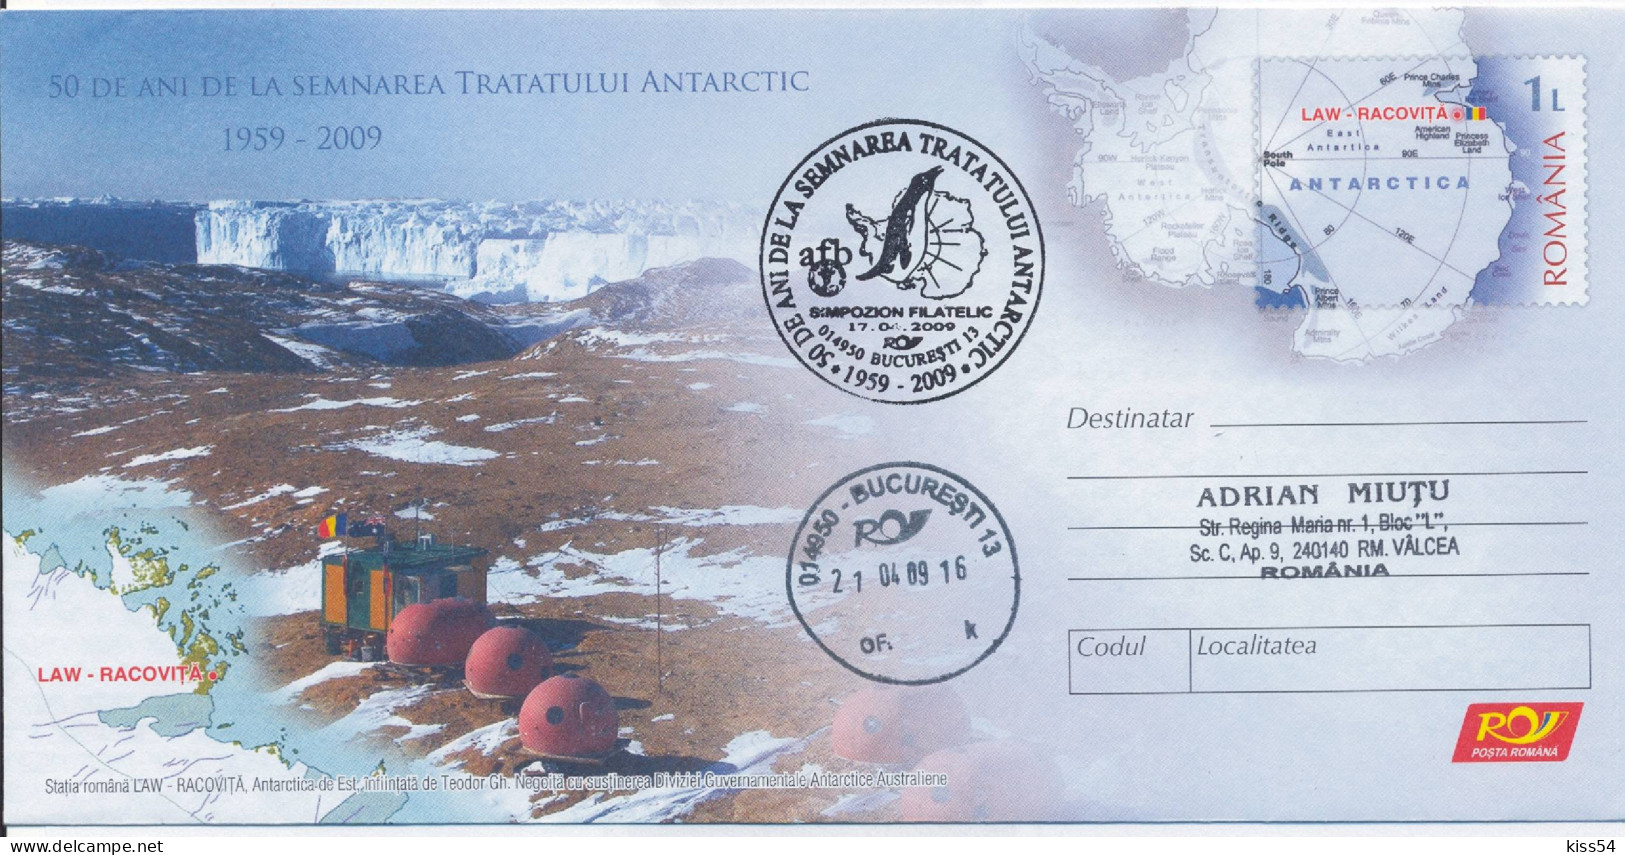 IP 2009 - 03a Antarctic Treaty - Stationery, Special Cancellation - Used - 2009 - Antarktisvertrag